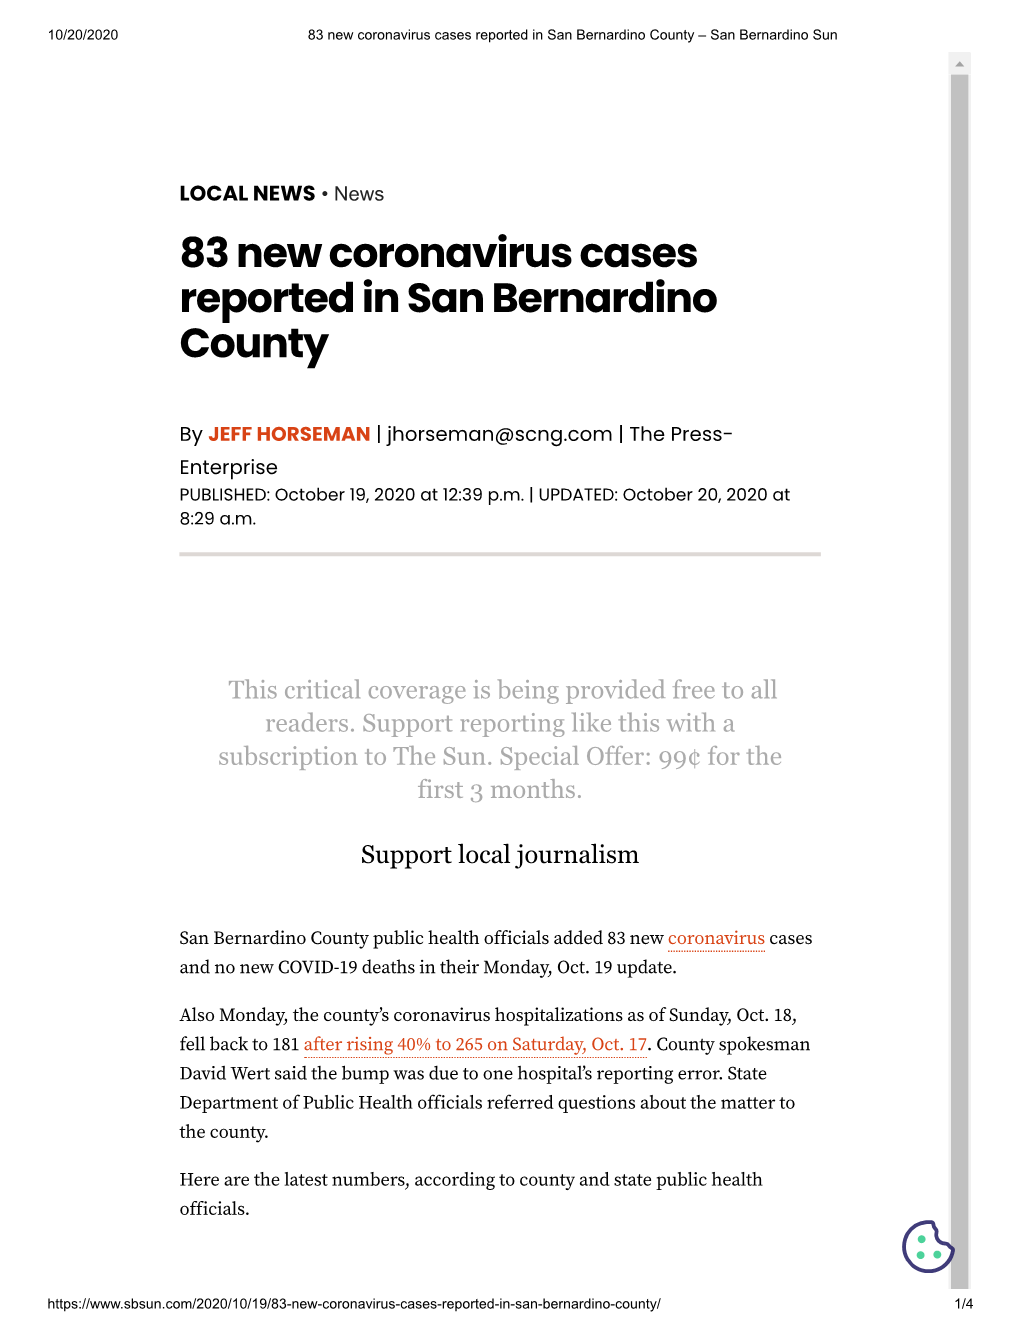 83 New Coronavirus Cases Reported in San Bernardino County – San Bernardino Sun